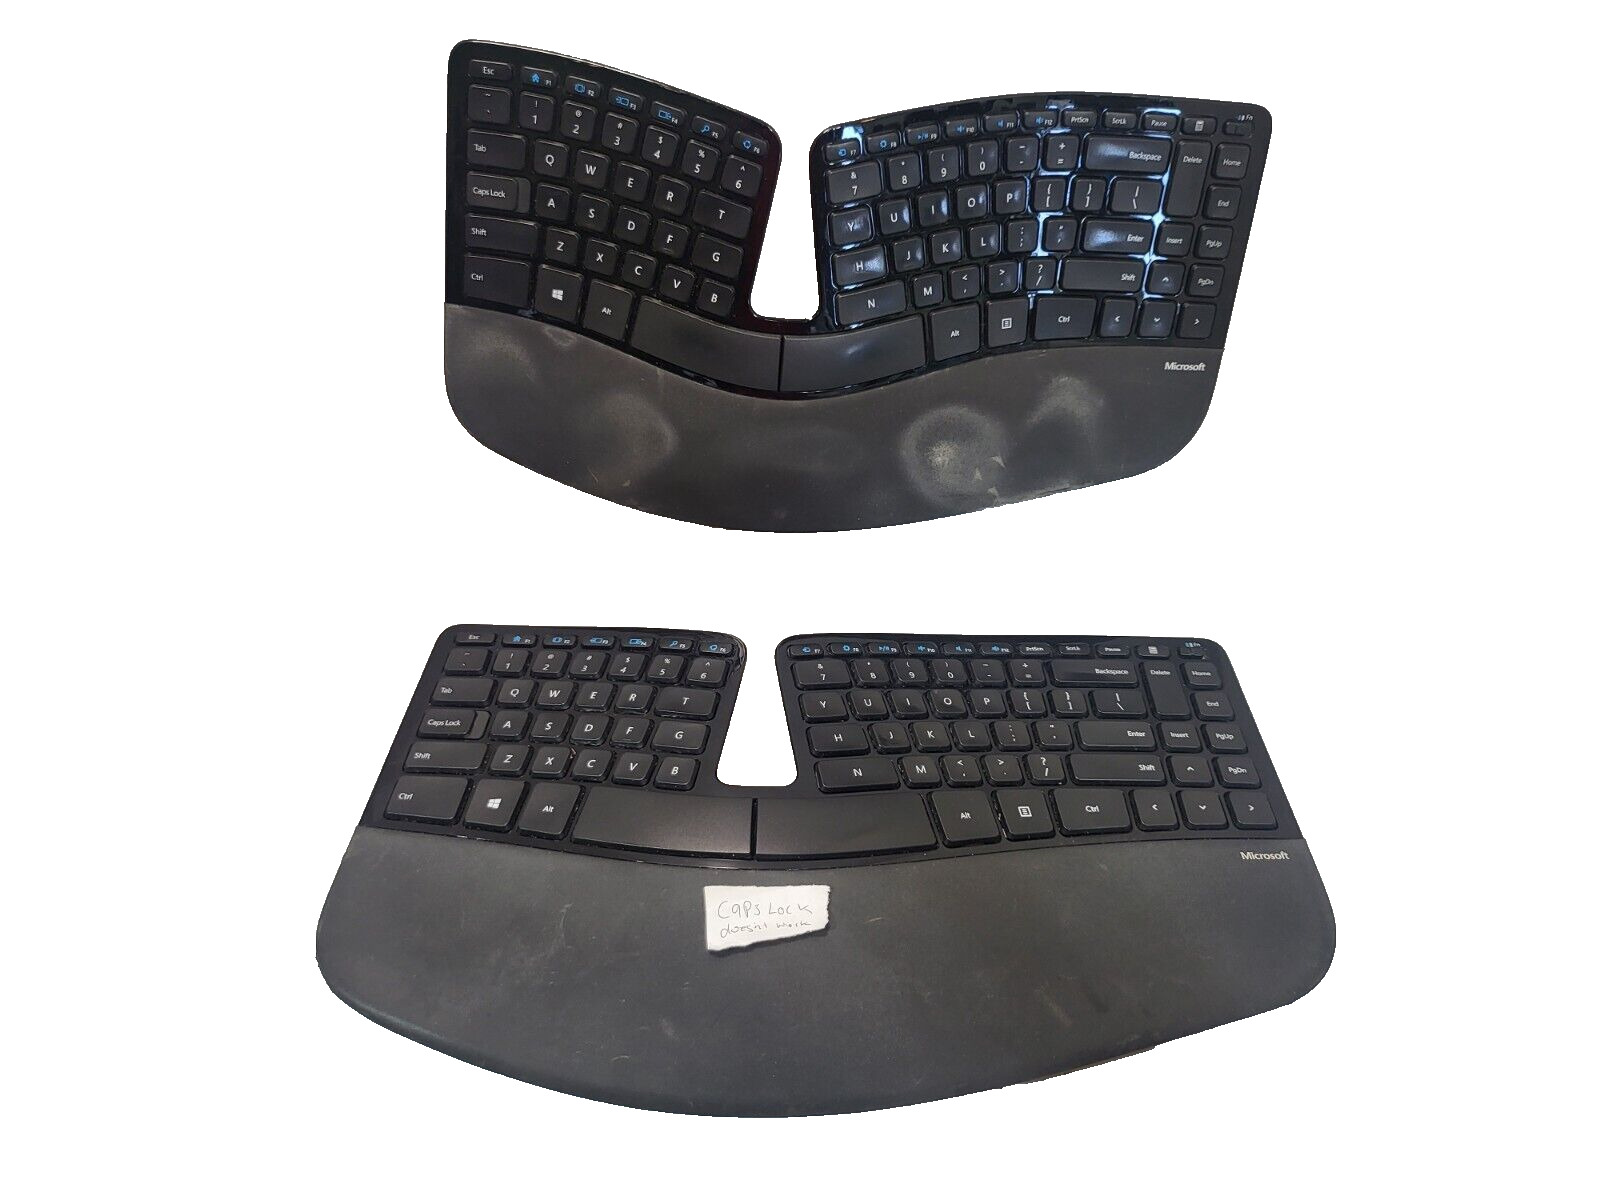 Lot of 2 - Microsoft 1559 Sculpt Ergonomic Wireless Keyboard - TESTED / READ